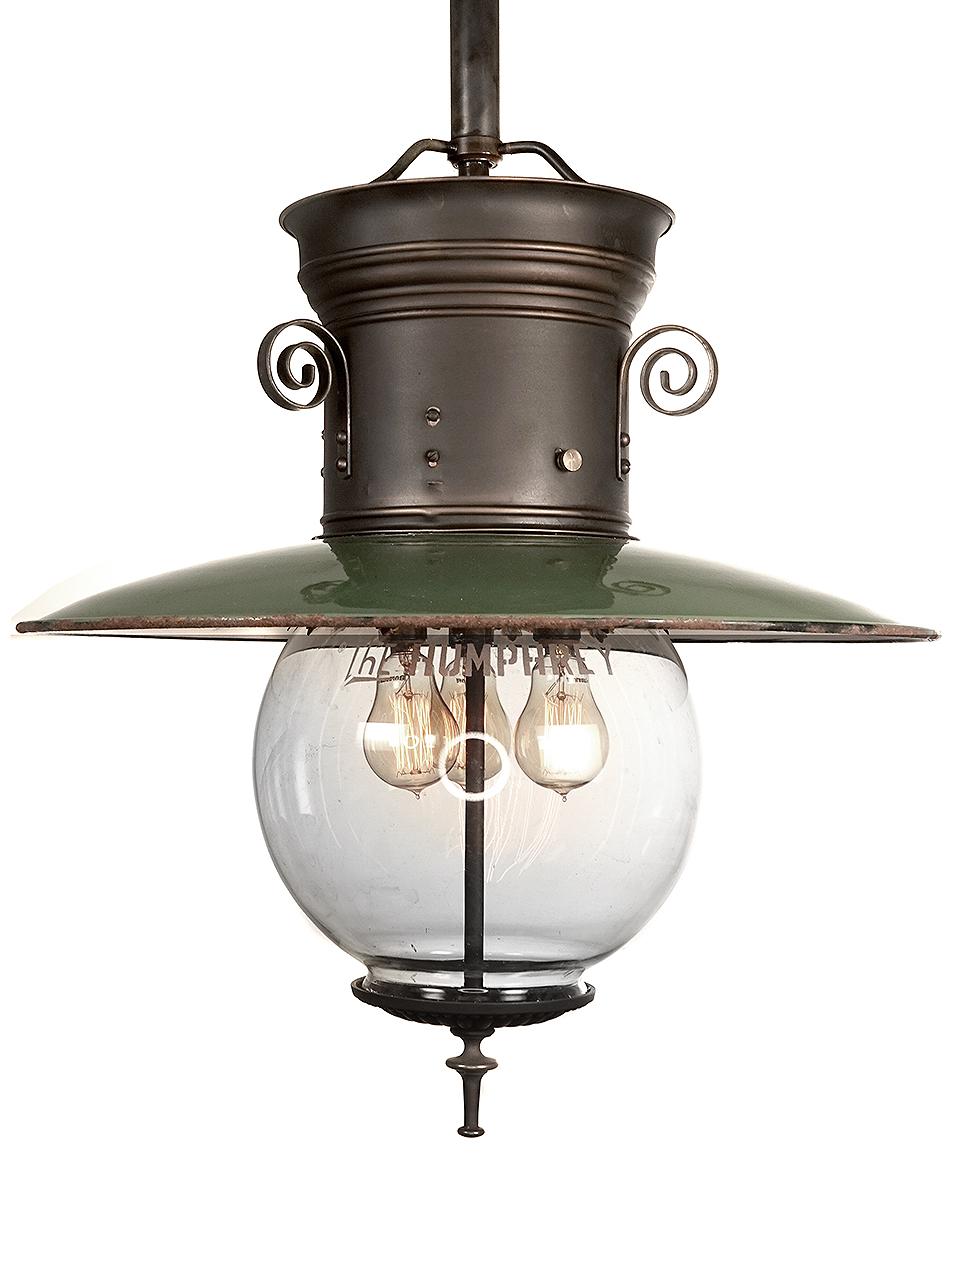 20th Century Humphrey Converted Gas Lamp